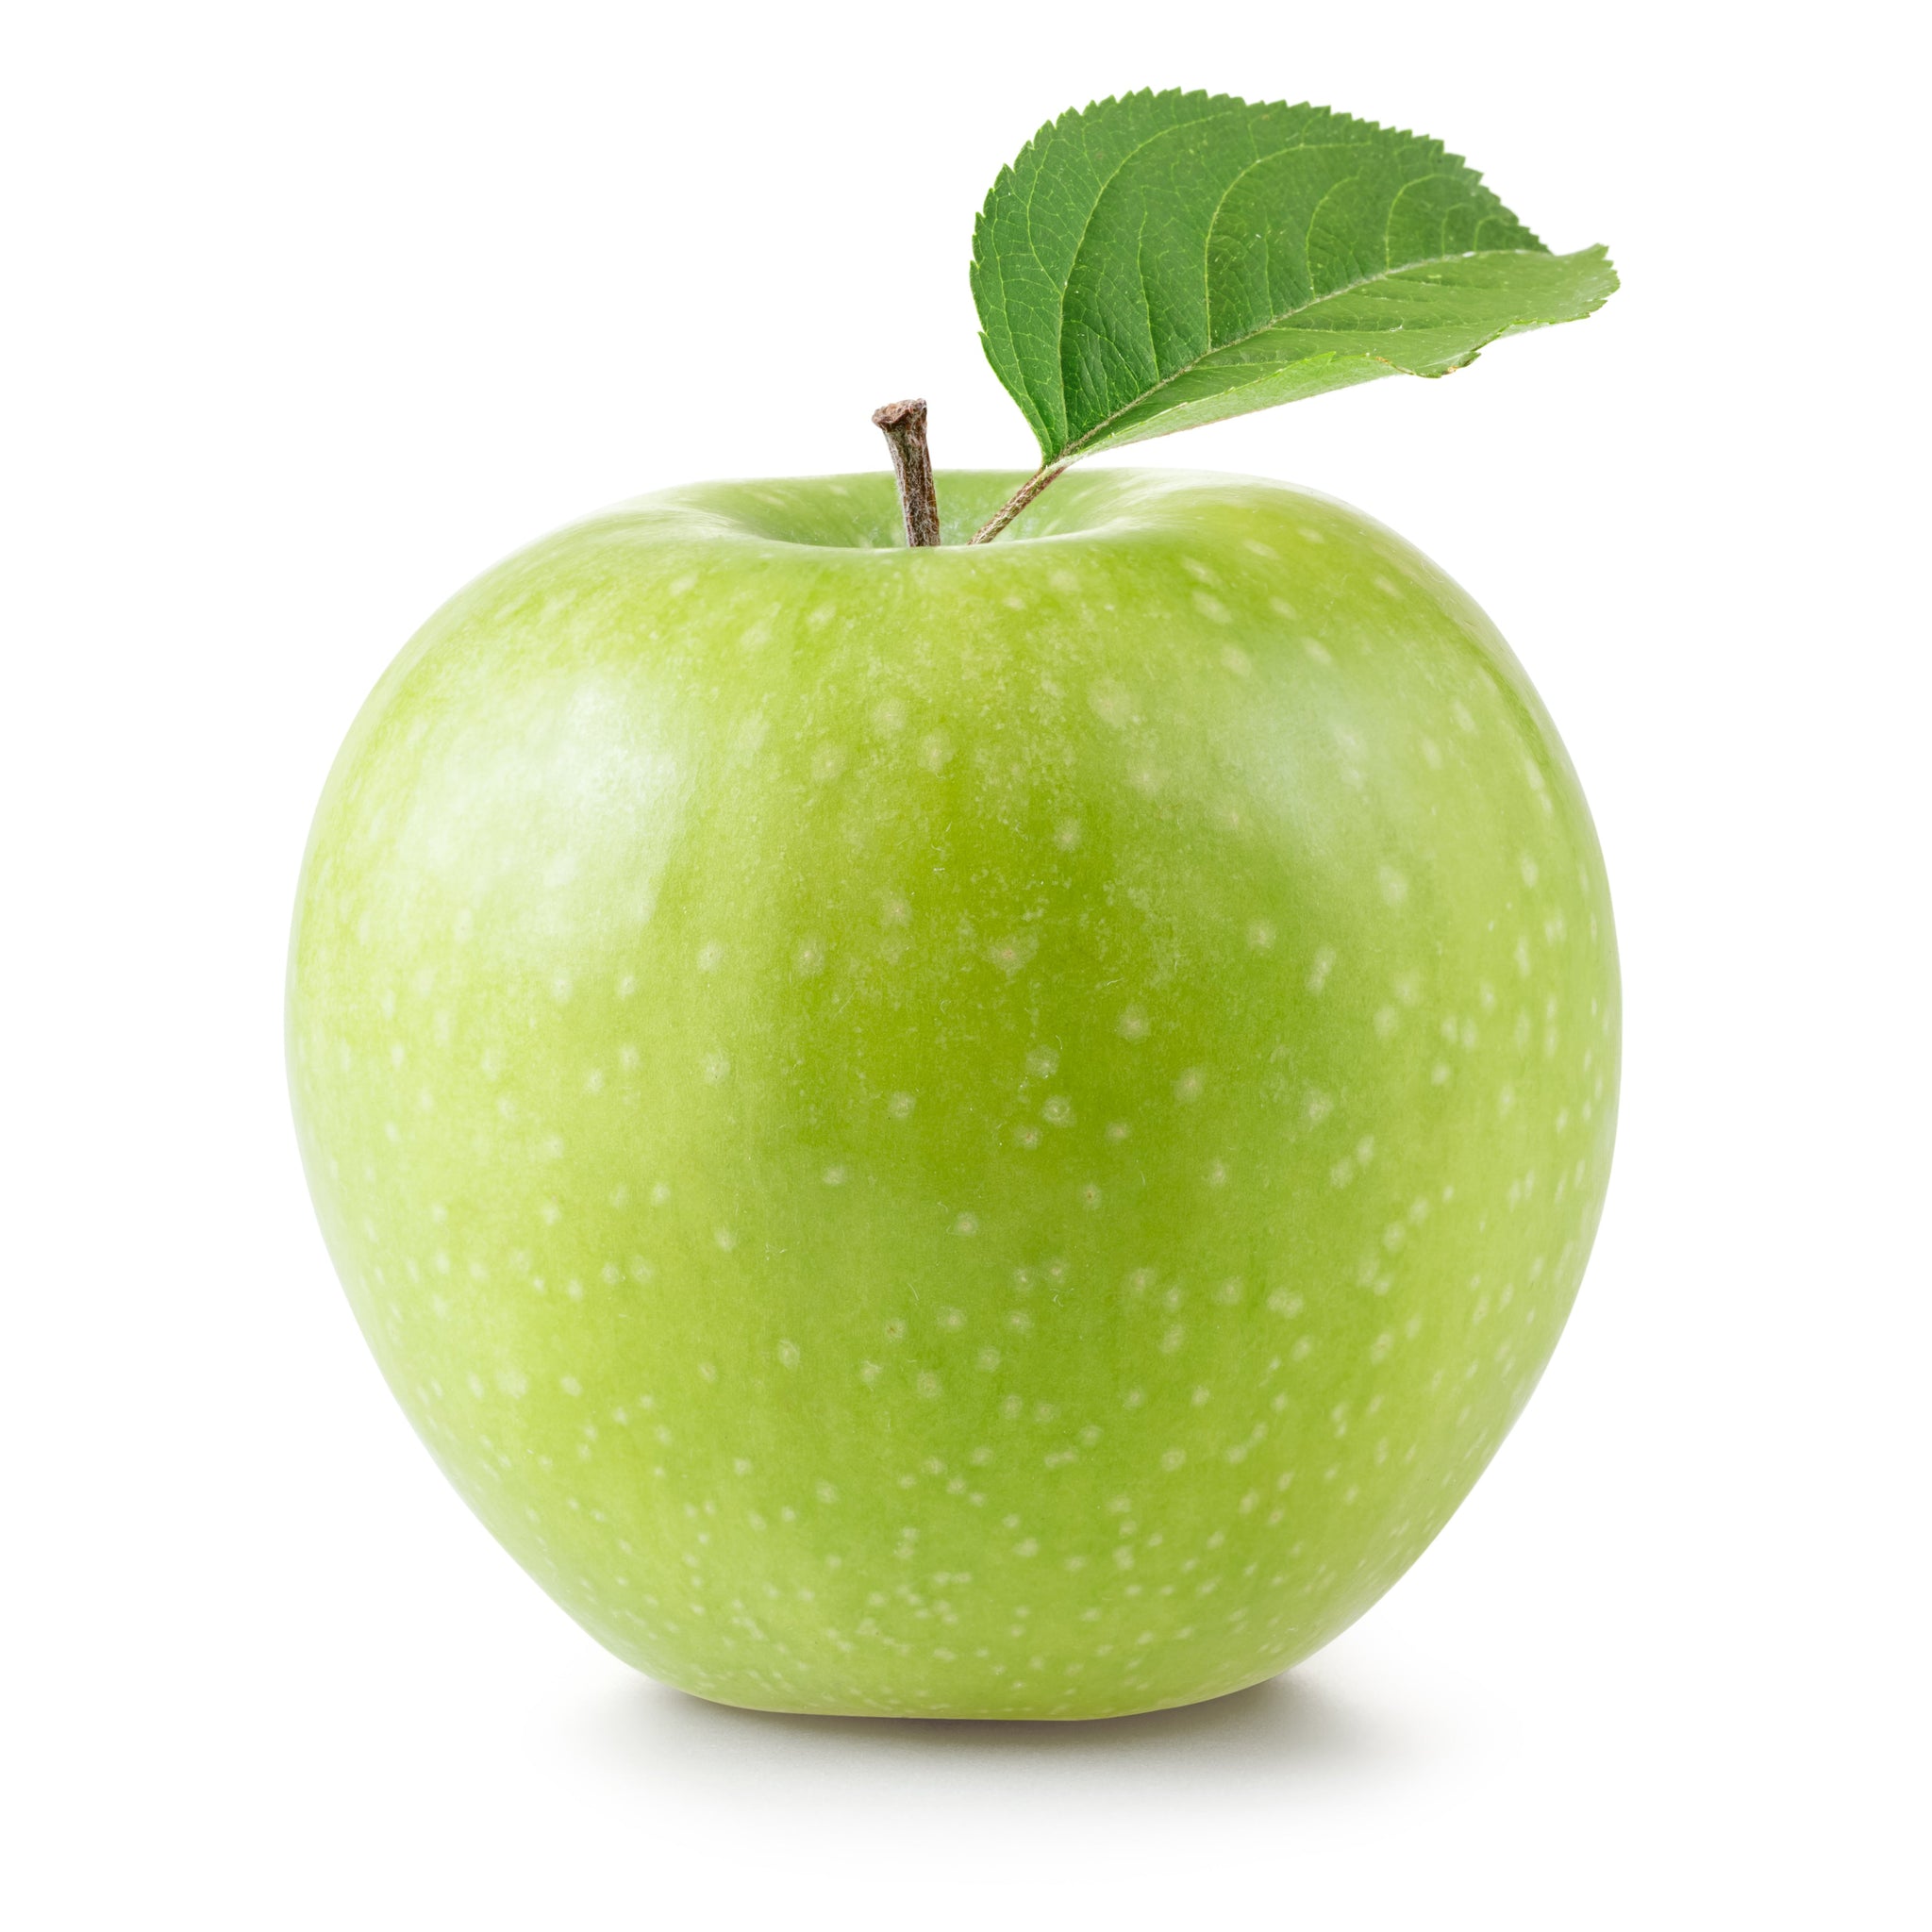 gre>Apples - Granny Smith - Small -1 Apple